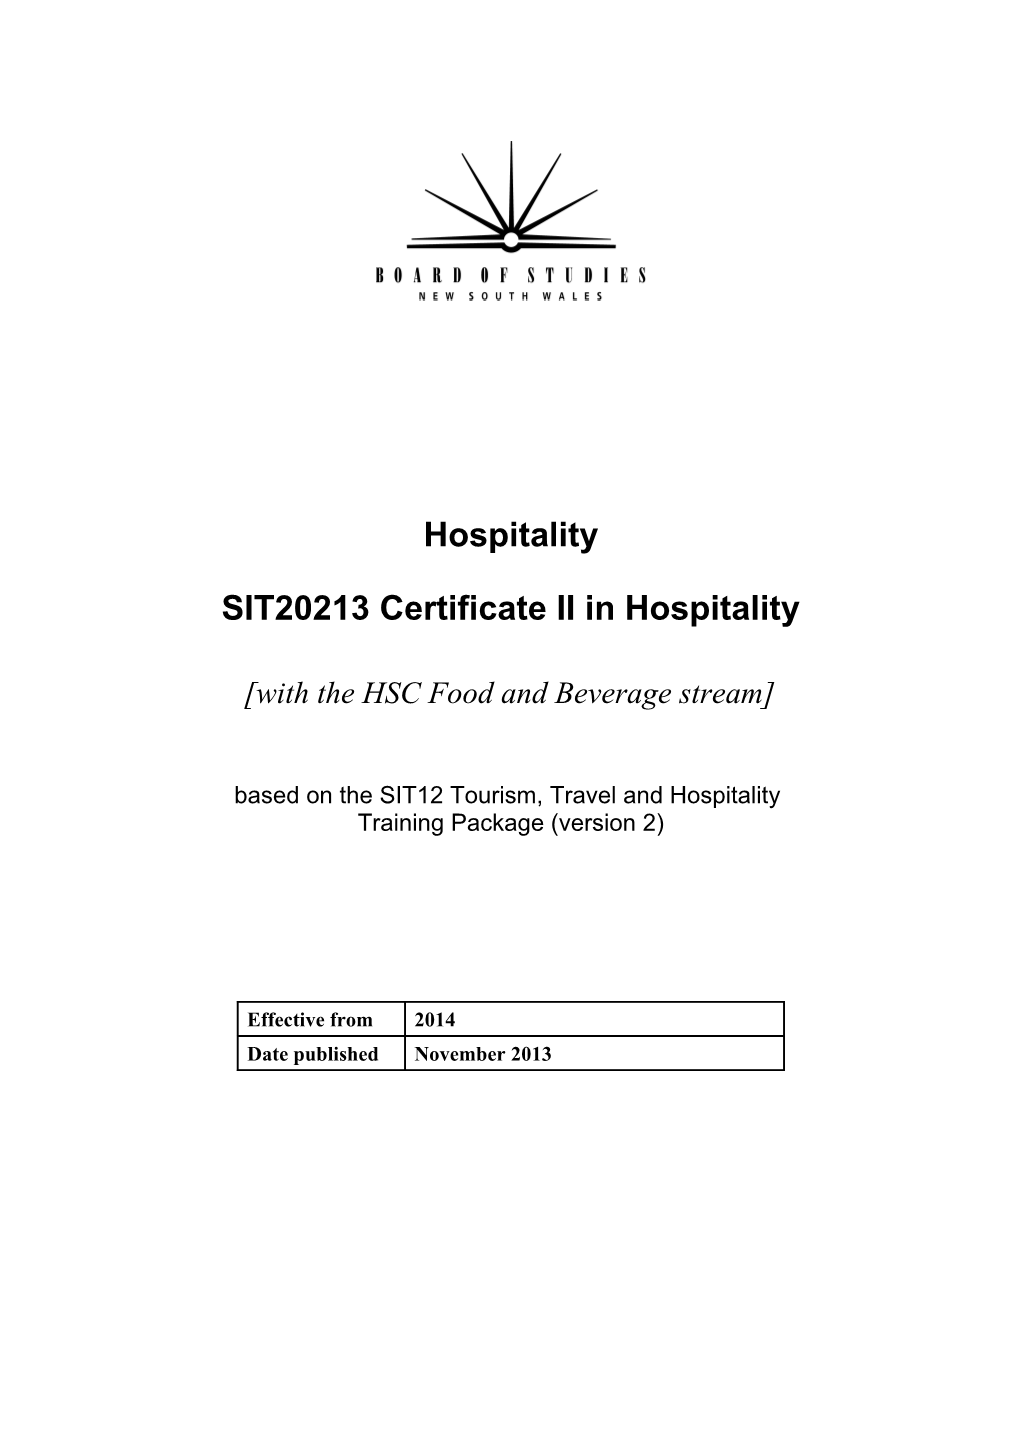 Hospitality - SIT20213 Certificate II in Hospitality